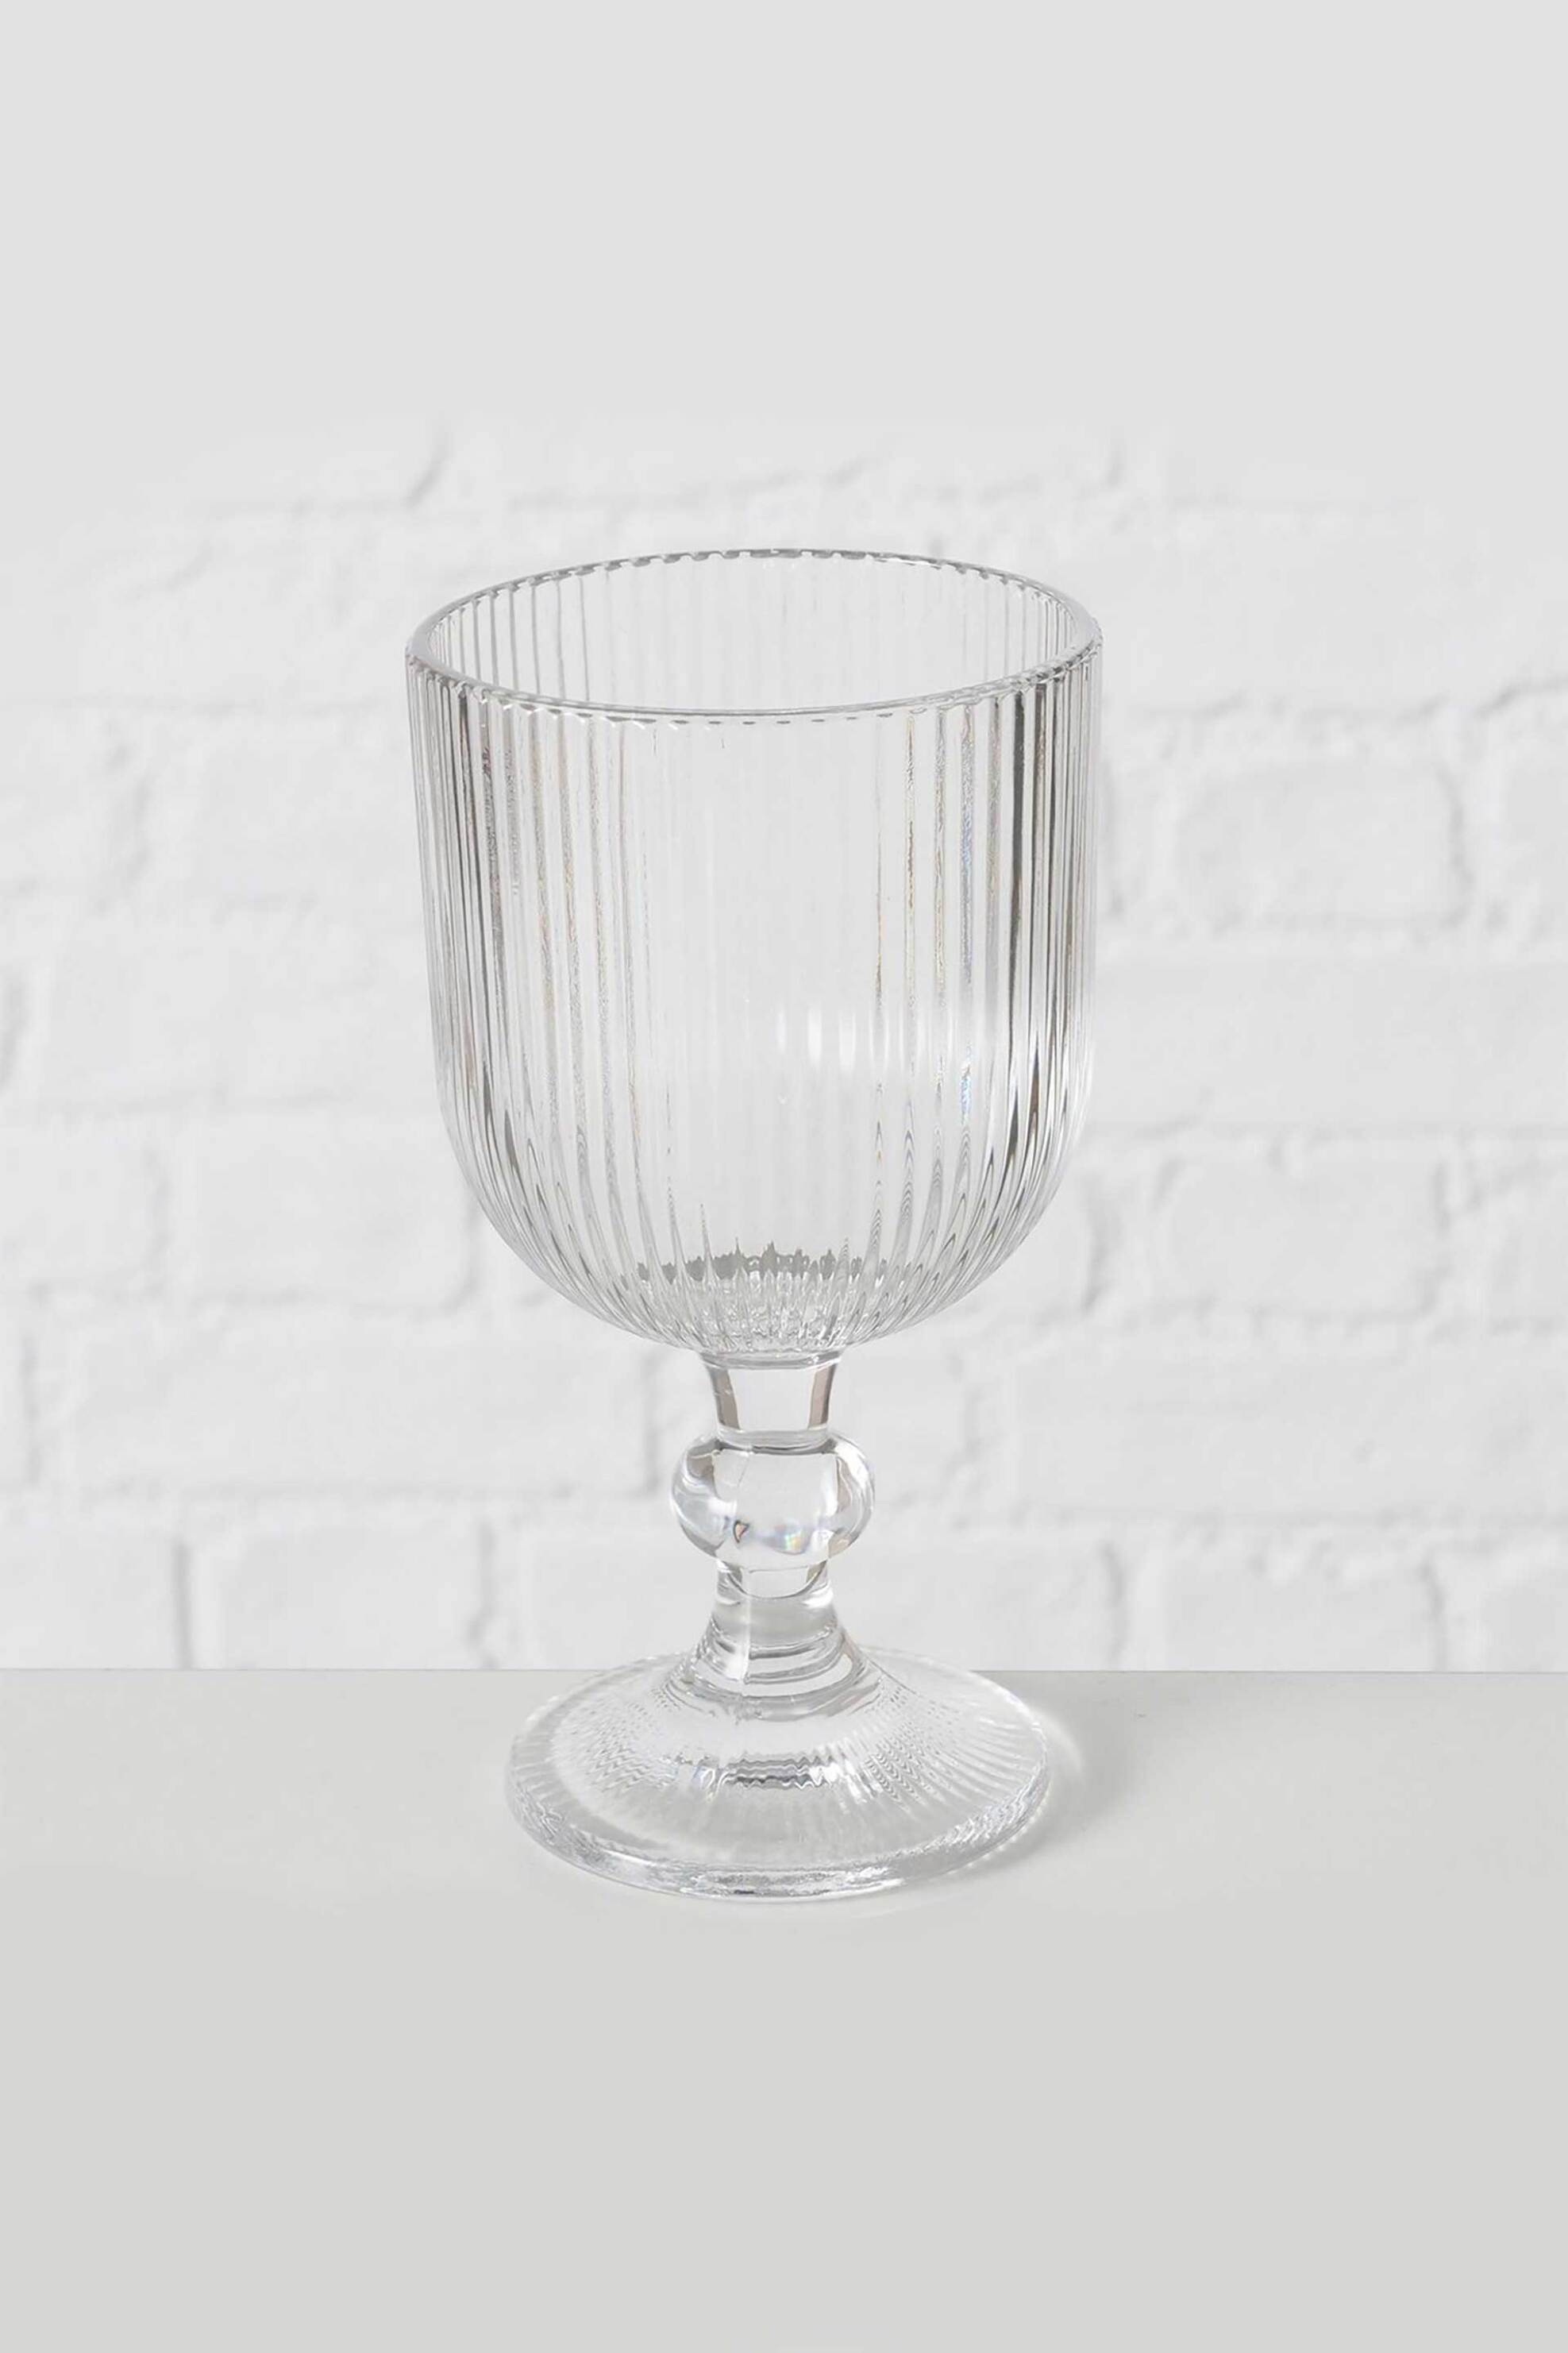 Home > ΚΟΥΖΙΝΑ > Υαλικά > Ποτήρια DOMUS HOMUS γυάλινο ποτήρι κρασιού "Rigano" 16 x 9 cm διάφανο - 20-25-425